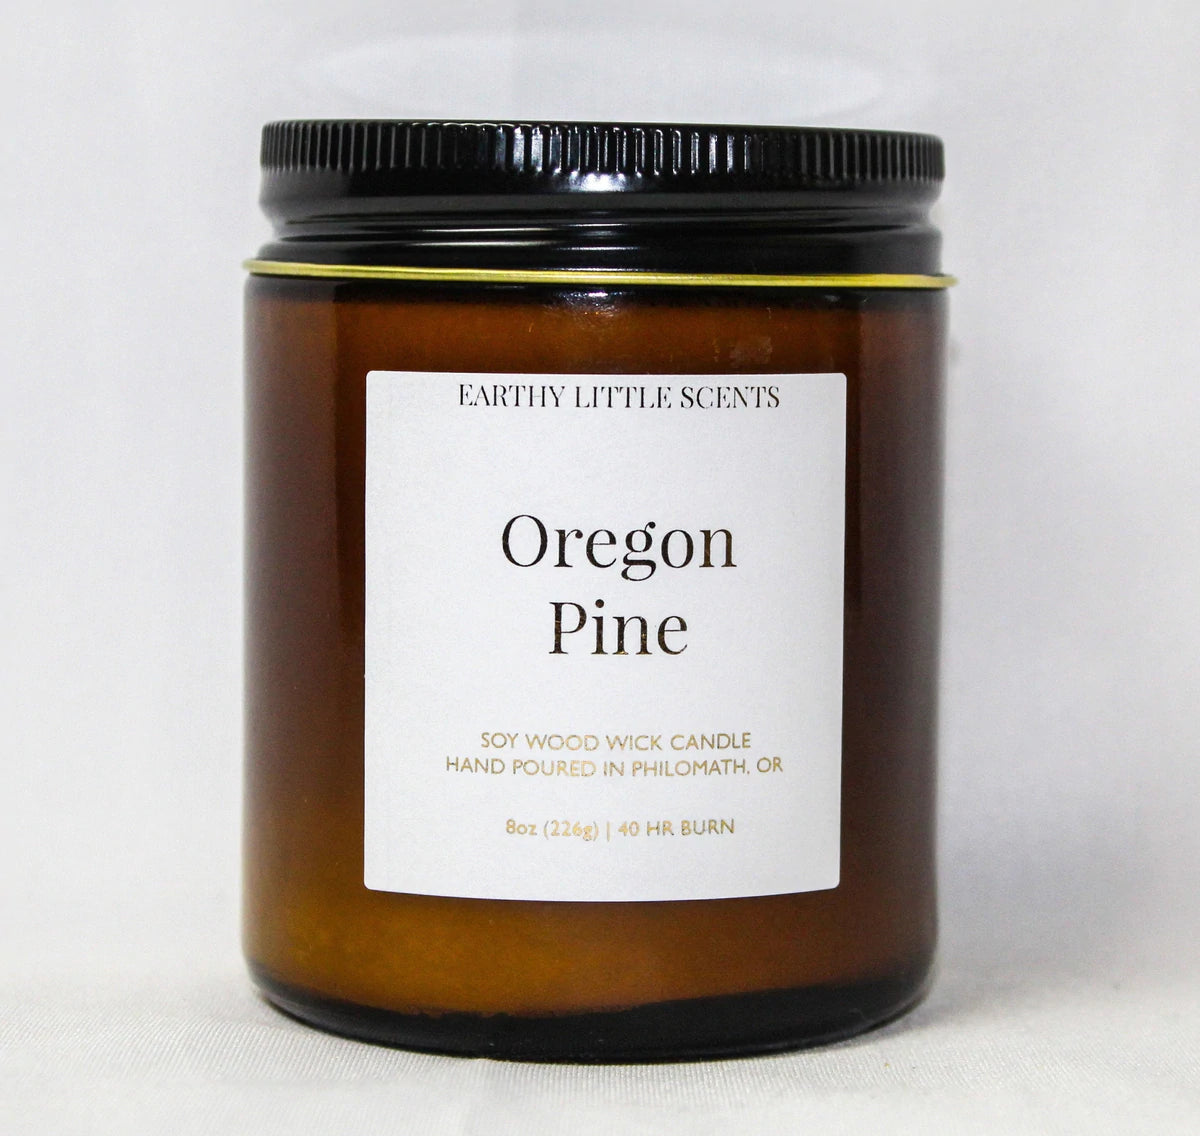 Oregon Pine Soy Wood Wick Candle